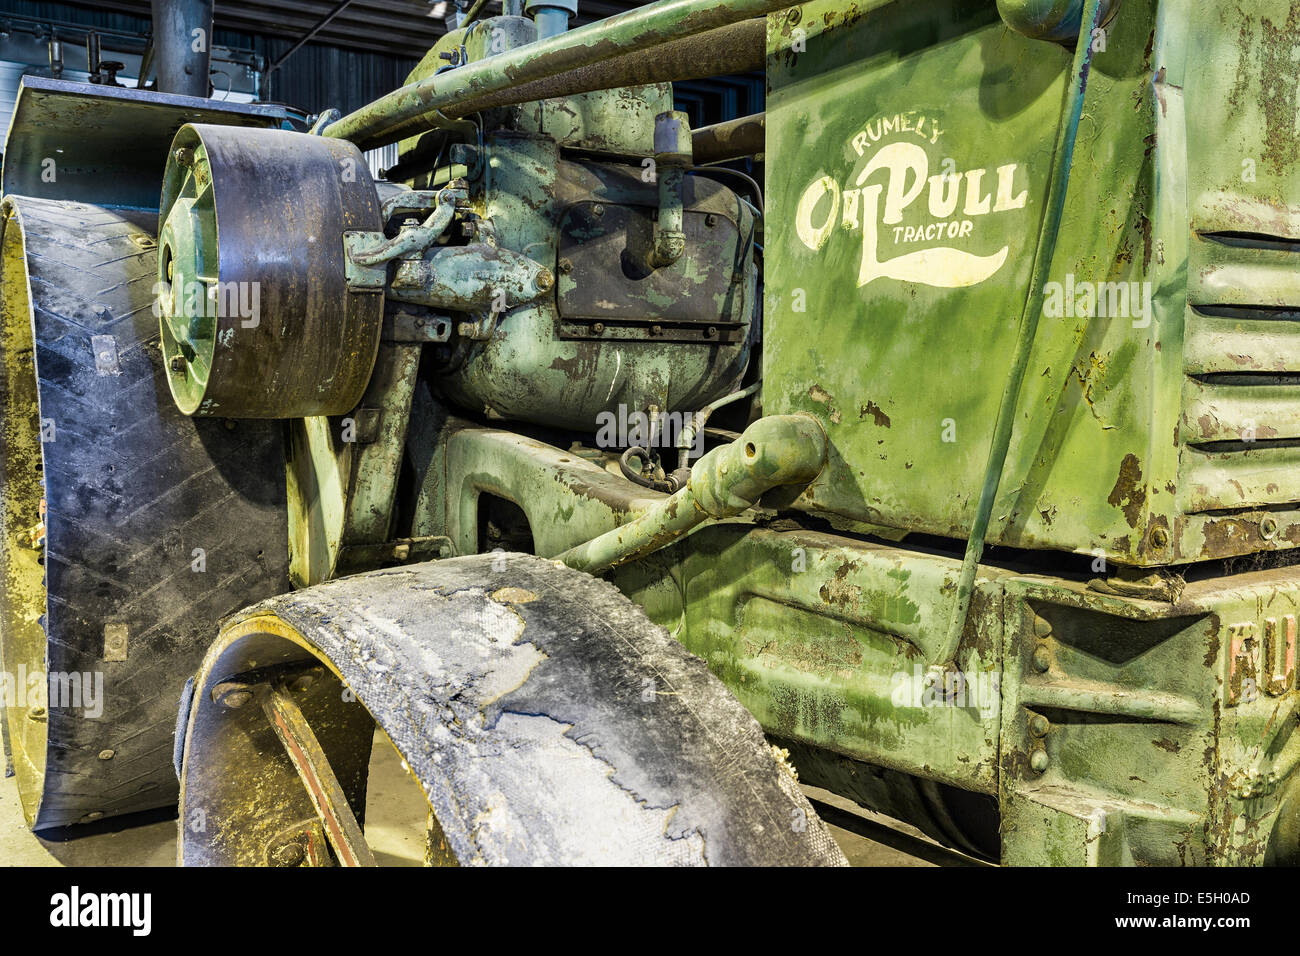 Vintage Oil Pull Rumely Tractor, cerrar, Mennonite Heritage Village, Steinbach, Manitoba, Canadá Foto de stock